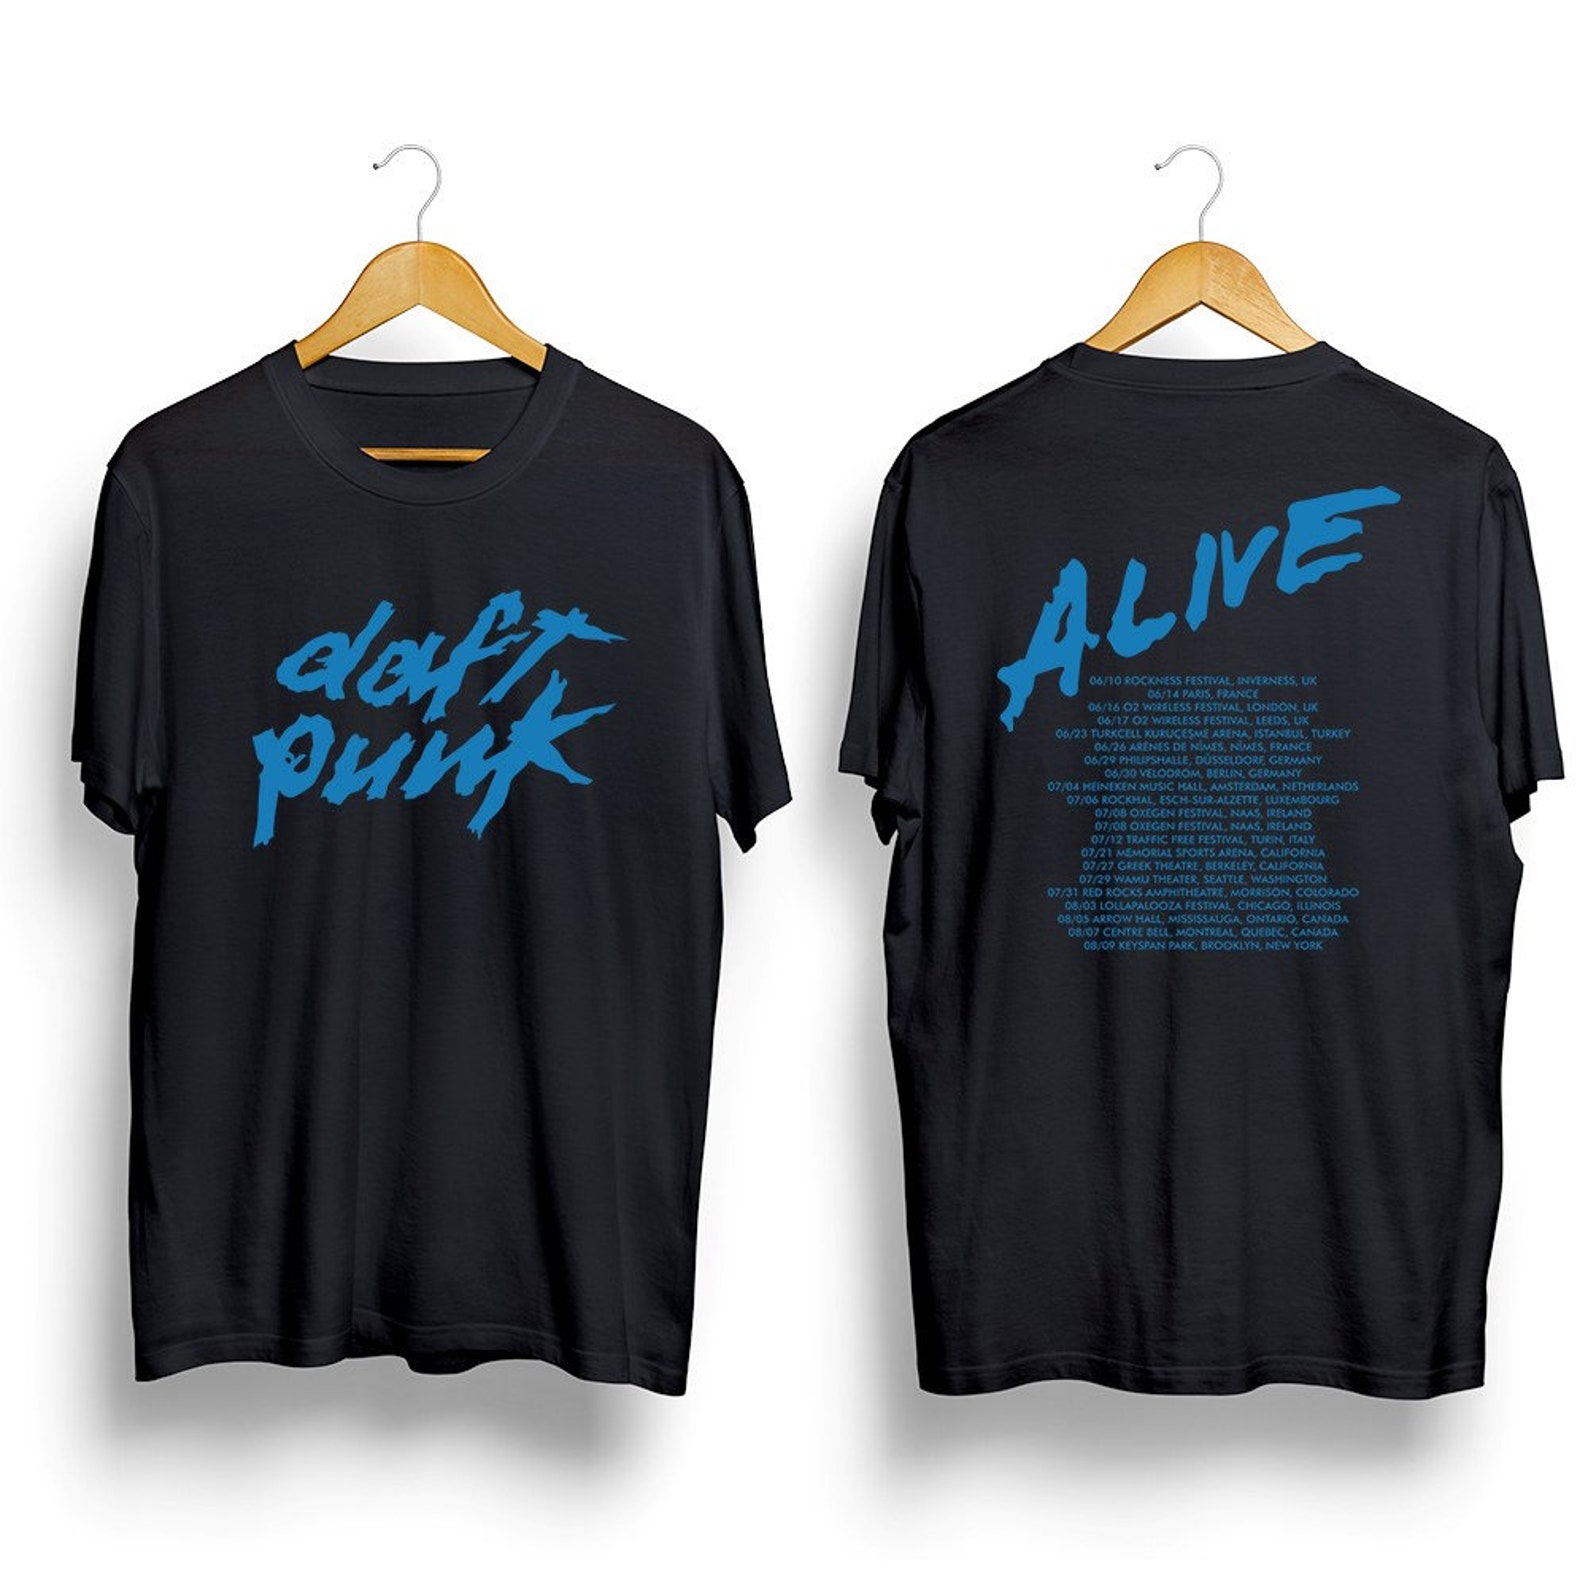 daft punk alive tour t shirt